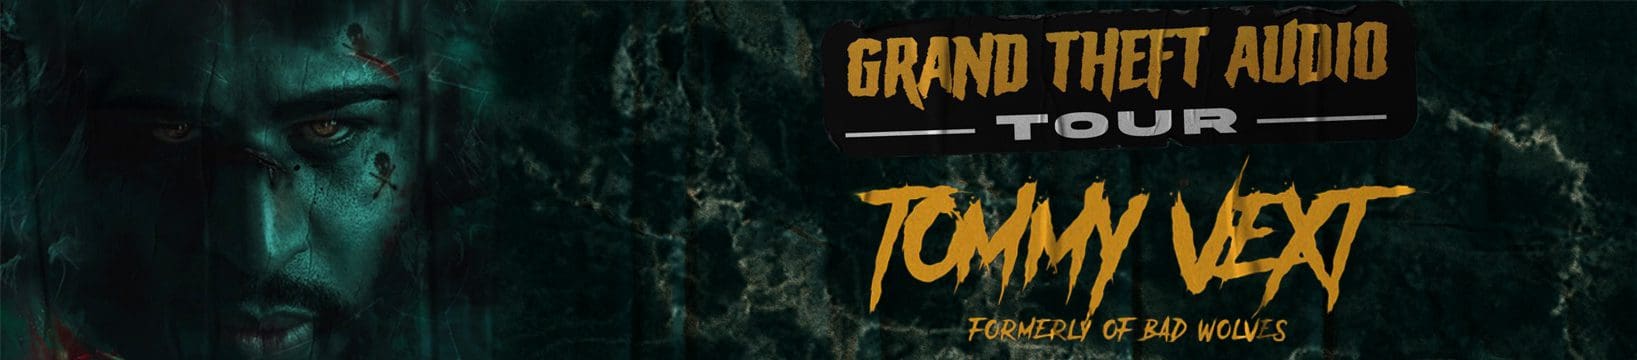 Grand Theft Audio Tour Banner